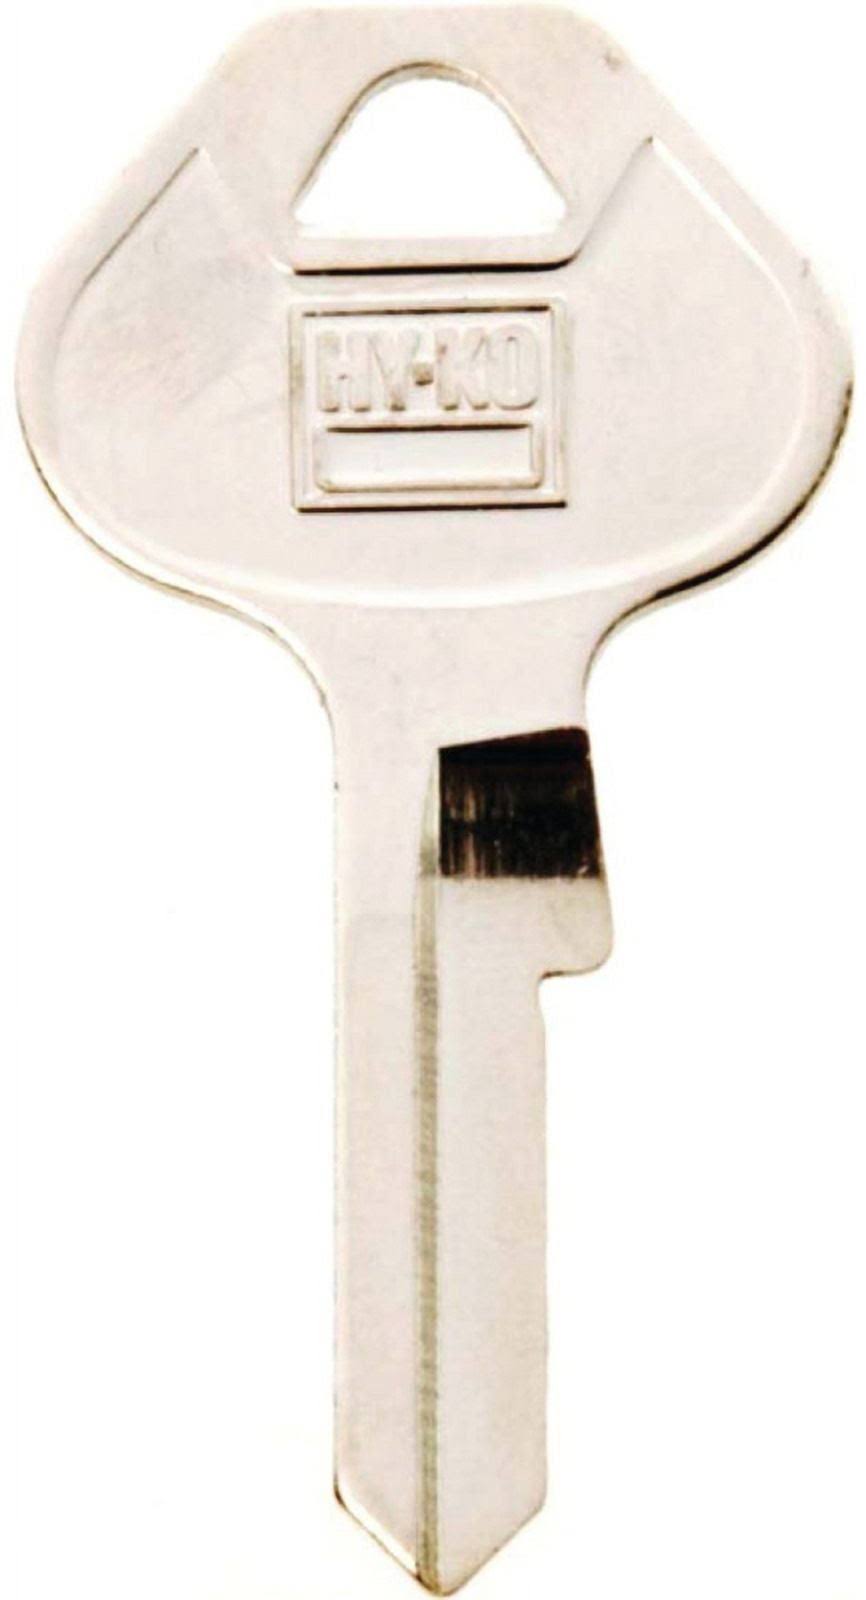 Hy-Ko Products Blank Master Lock Key